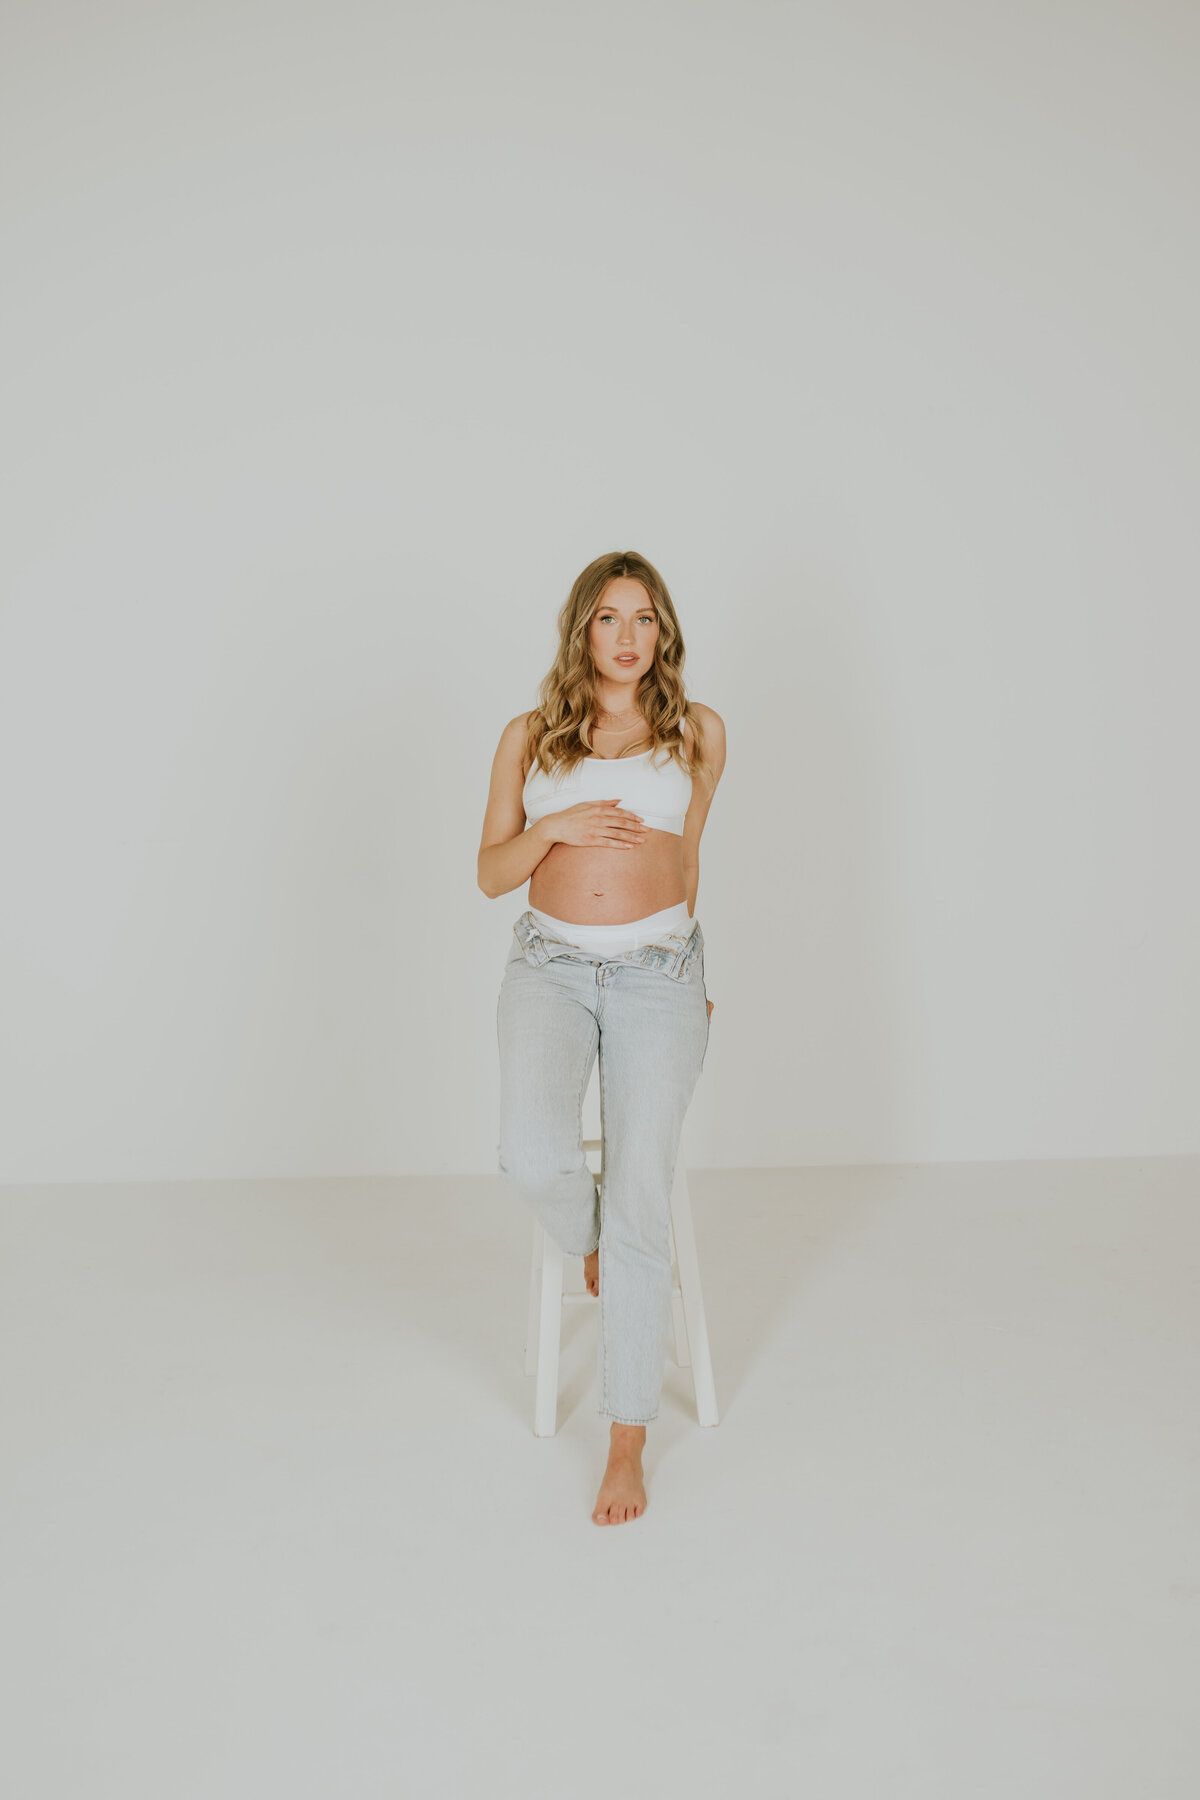 alaska studio photoshoot with pregnant mom